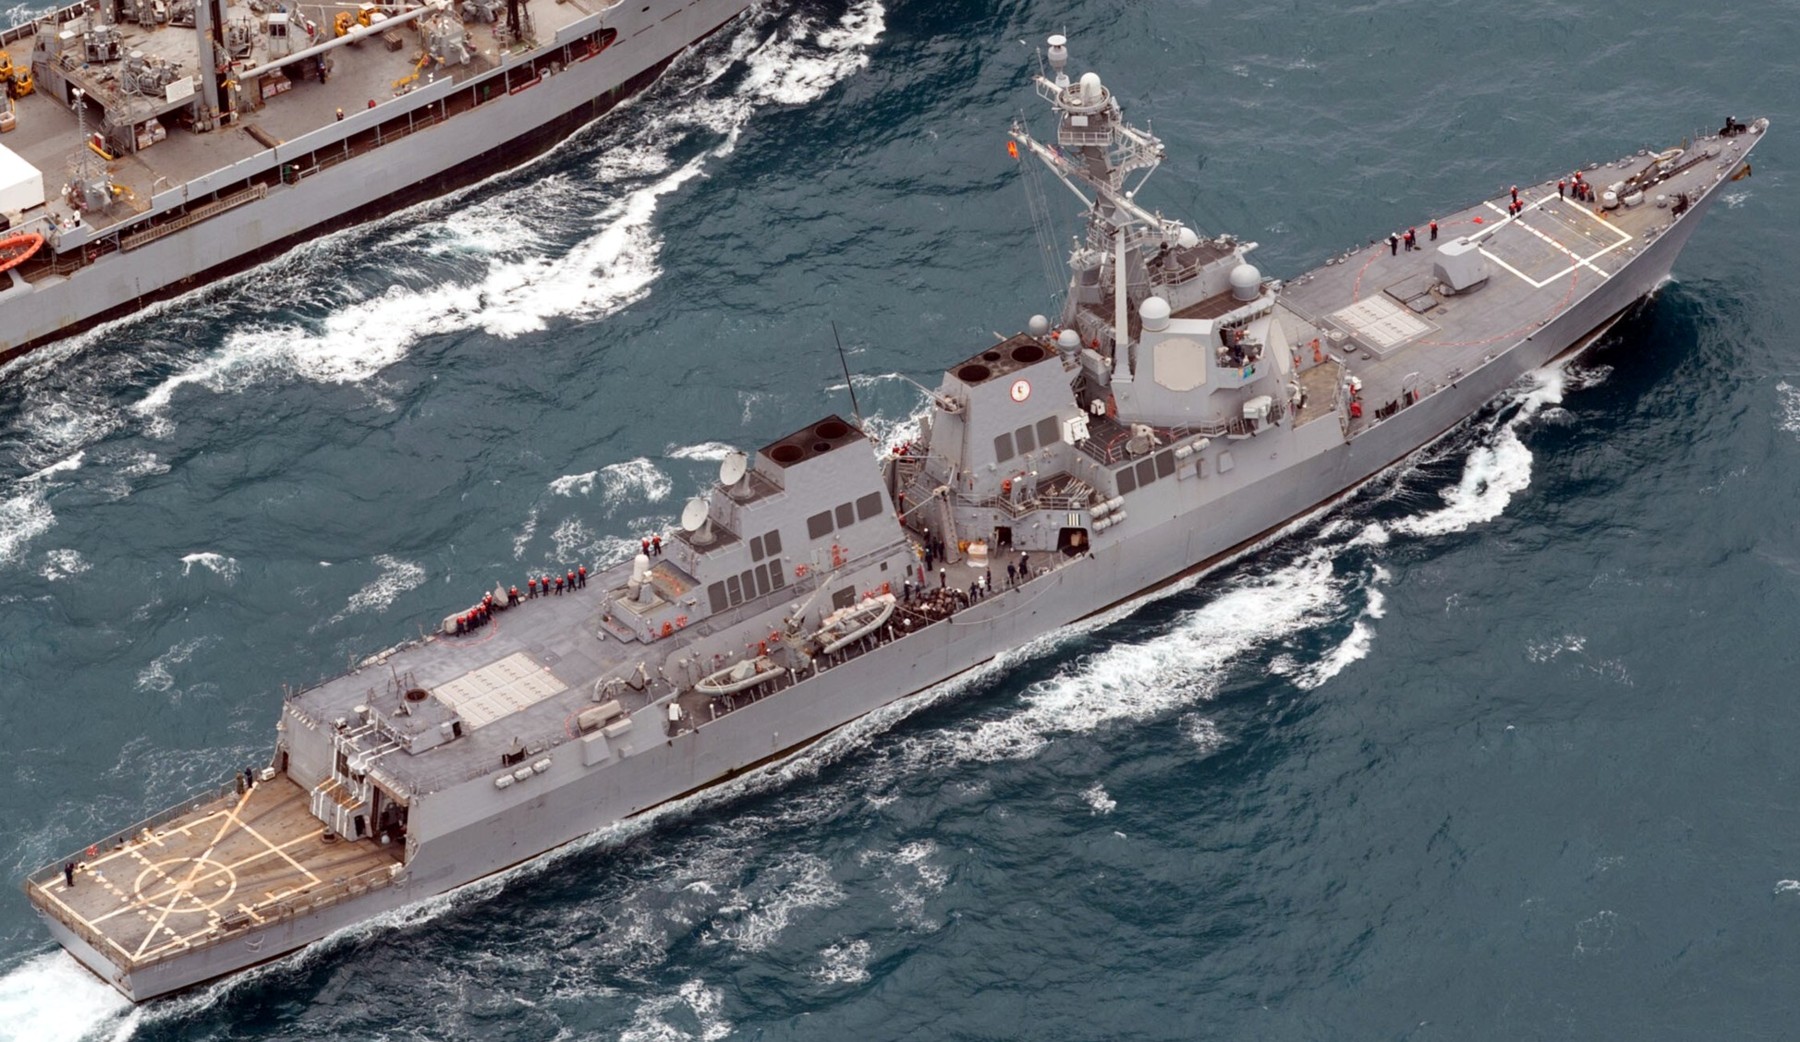 ddg-102 uss sampson arleigh burke class guided missile destroyer aegis us navy java sea 57